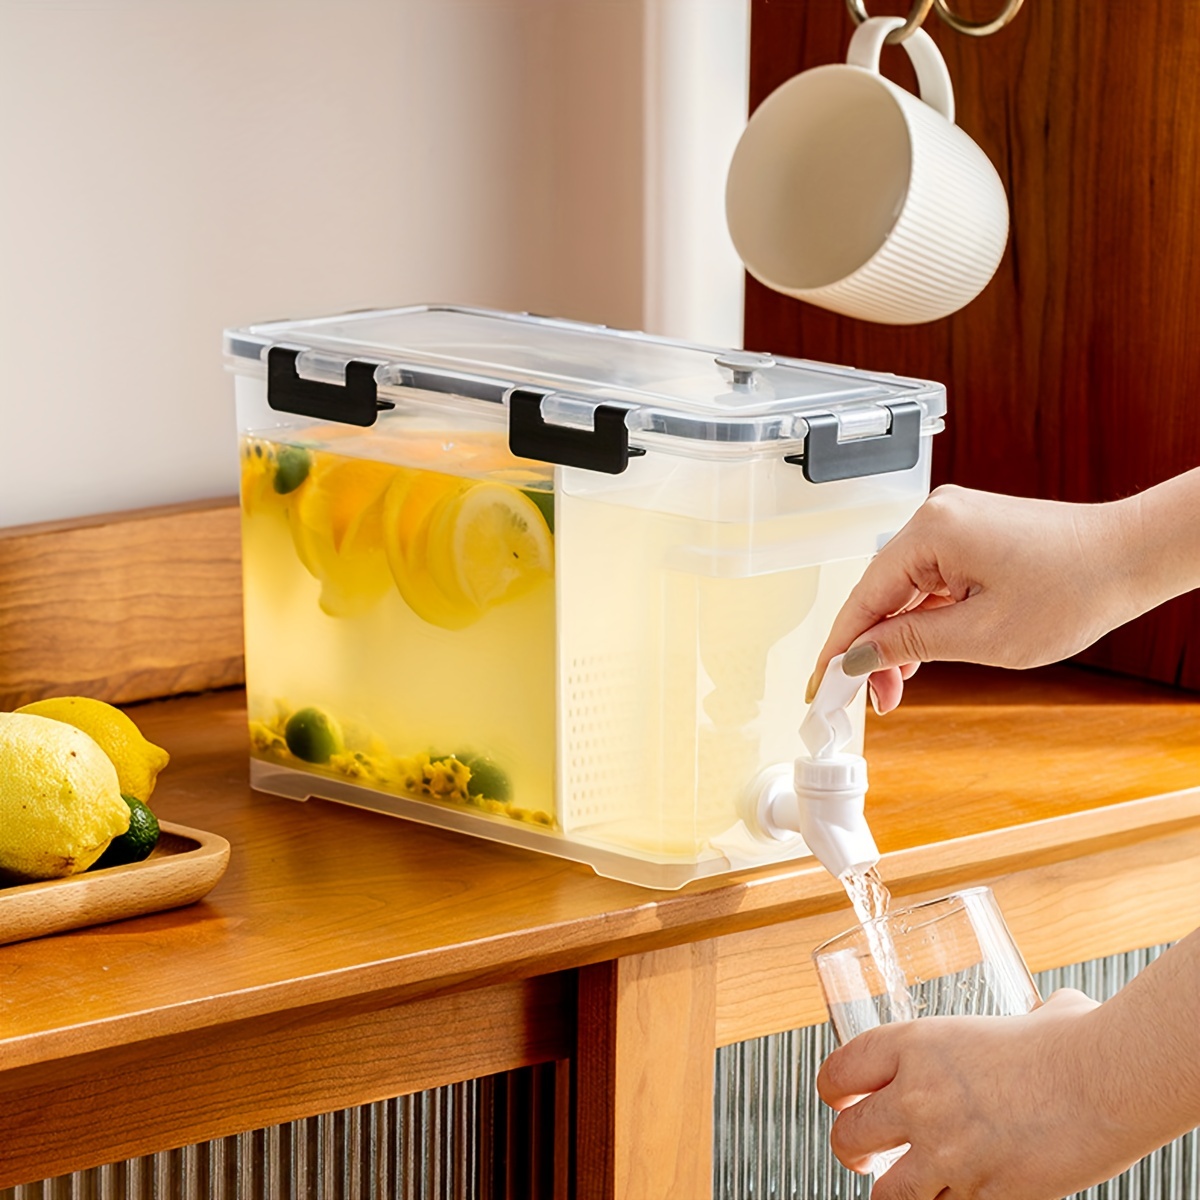 Beverage Dispenser With Spigot (1gallon) Refrigerator Cold Kettle